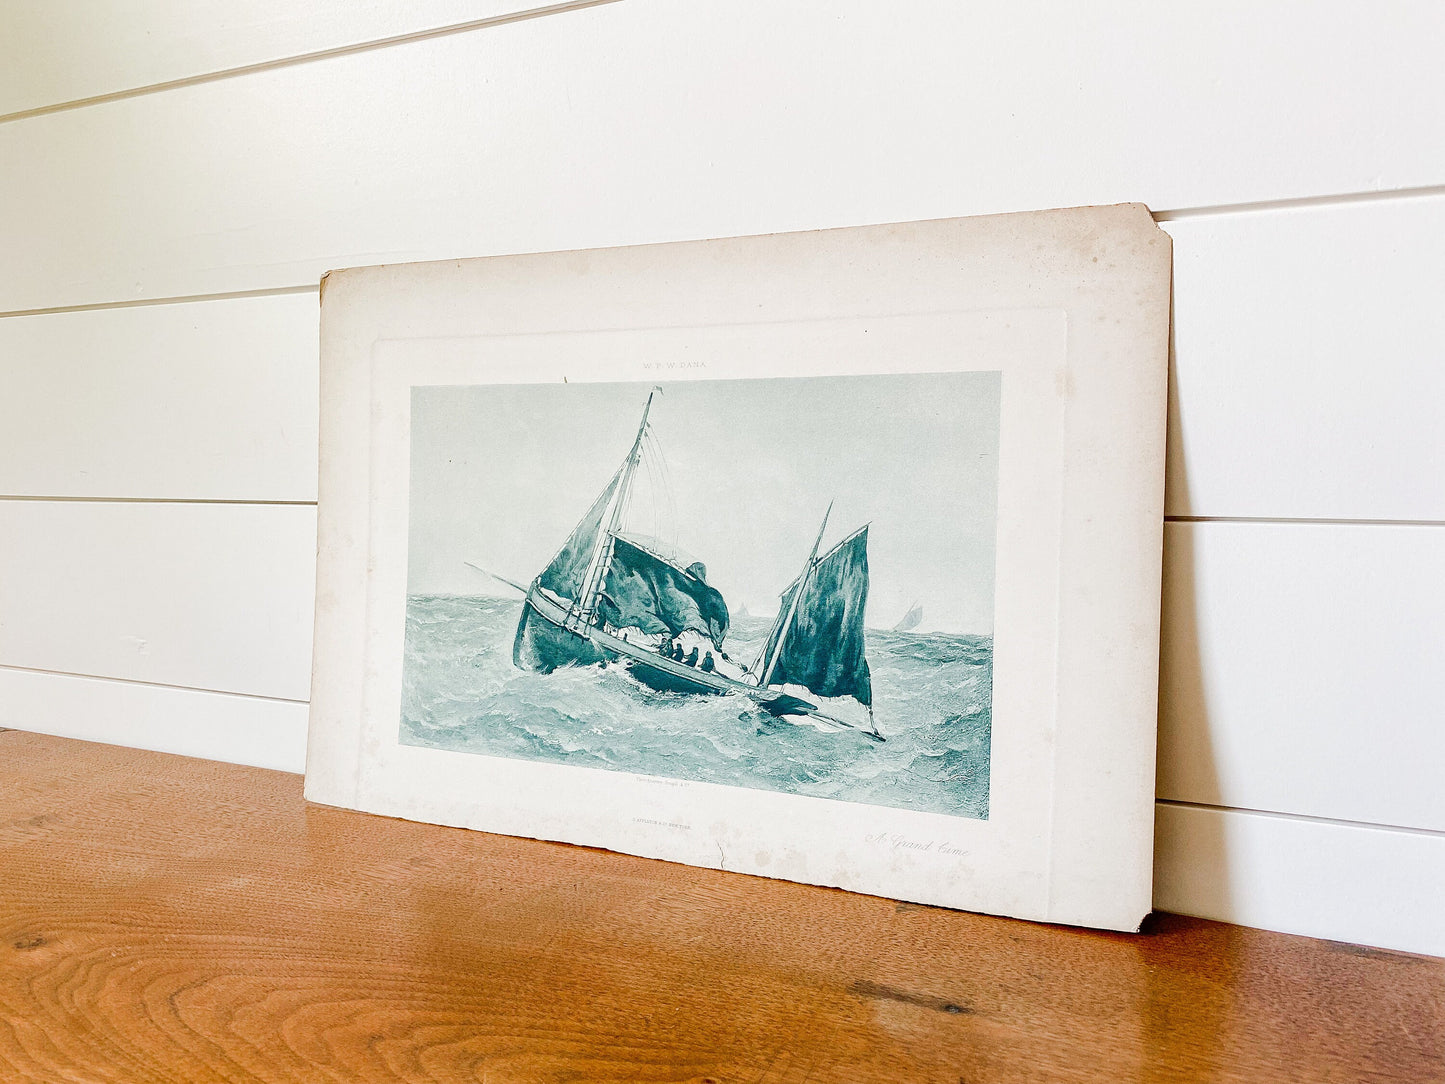 Antique Nautical Art Print - A Grand Time by Dana